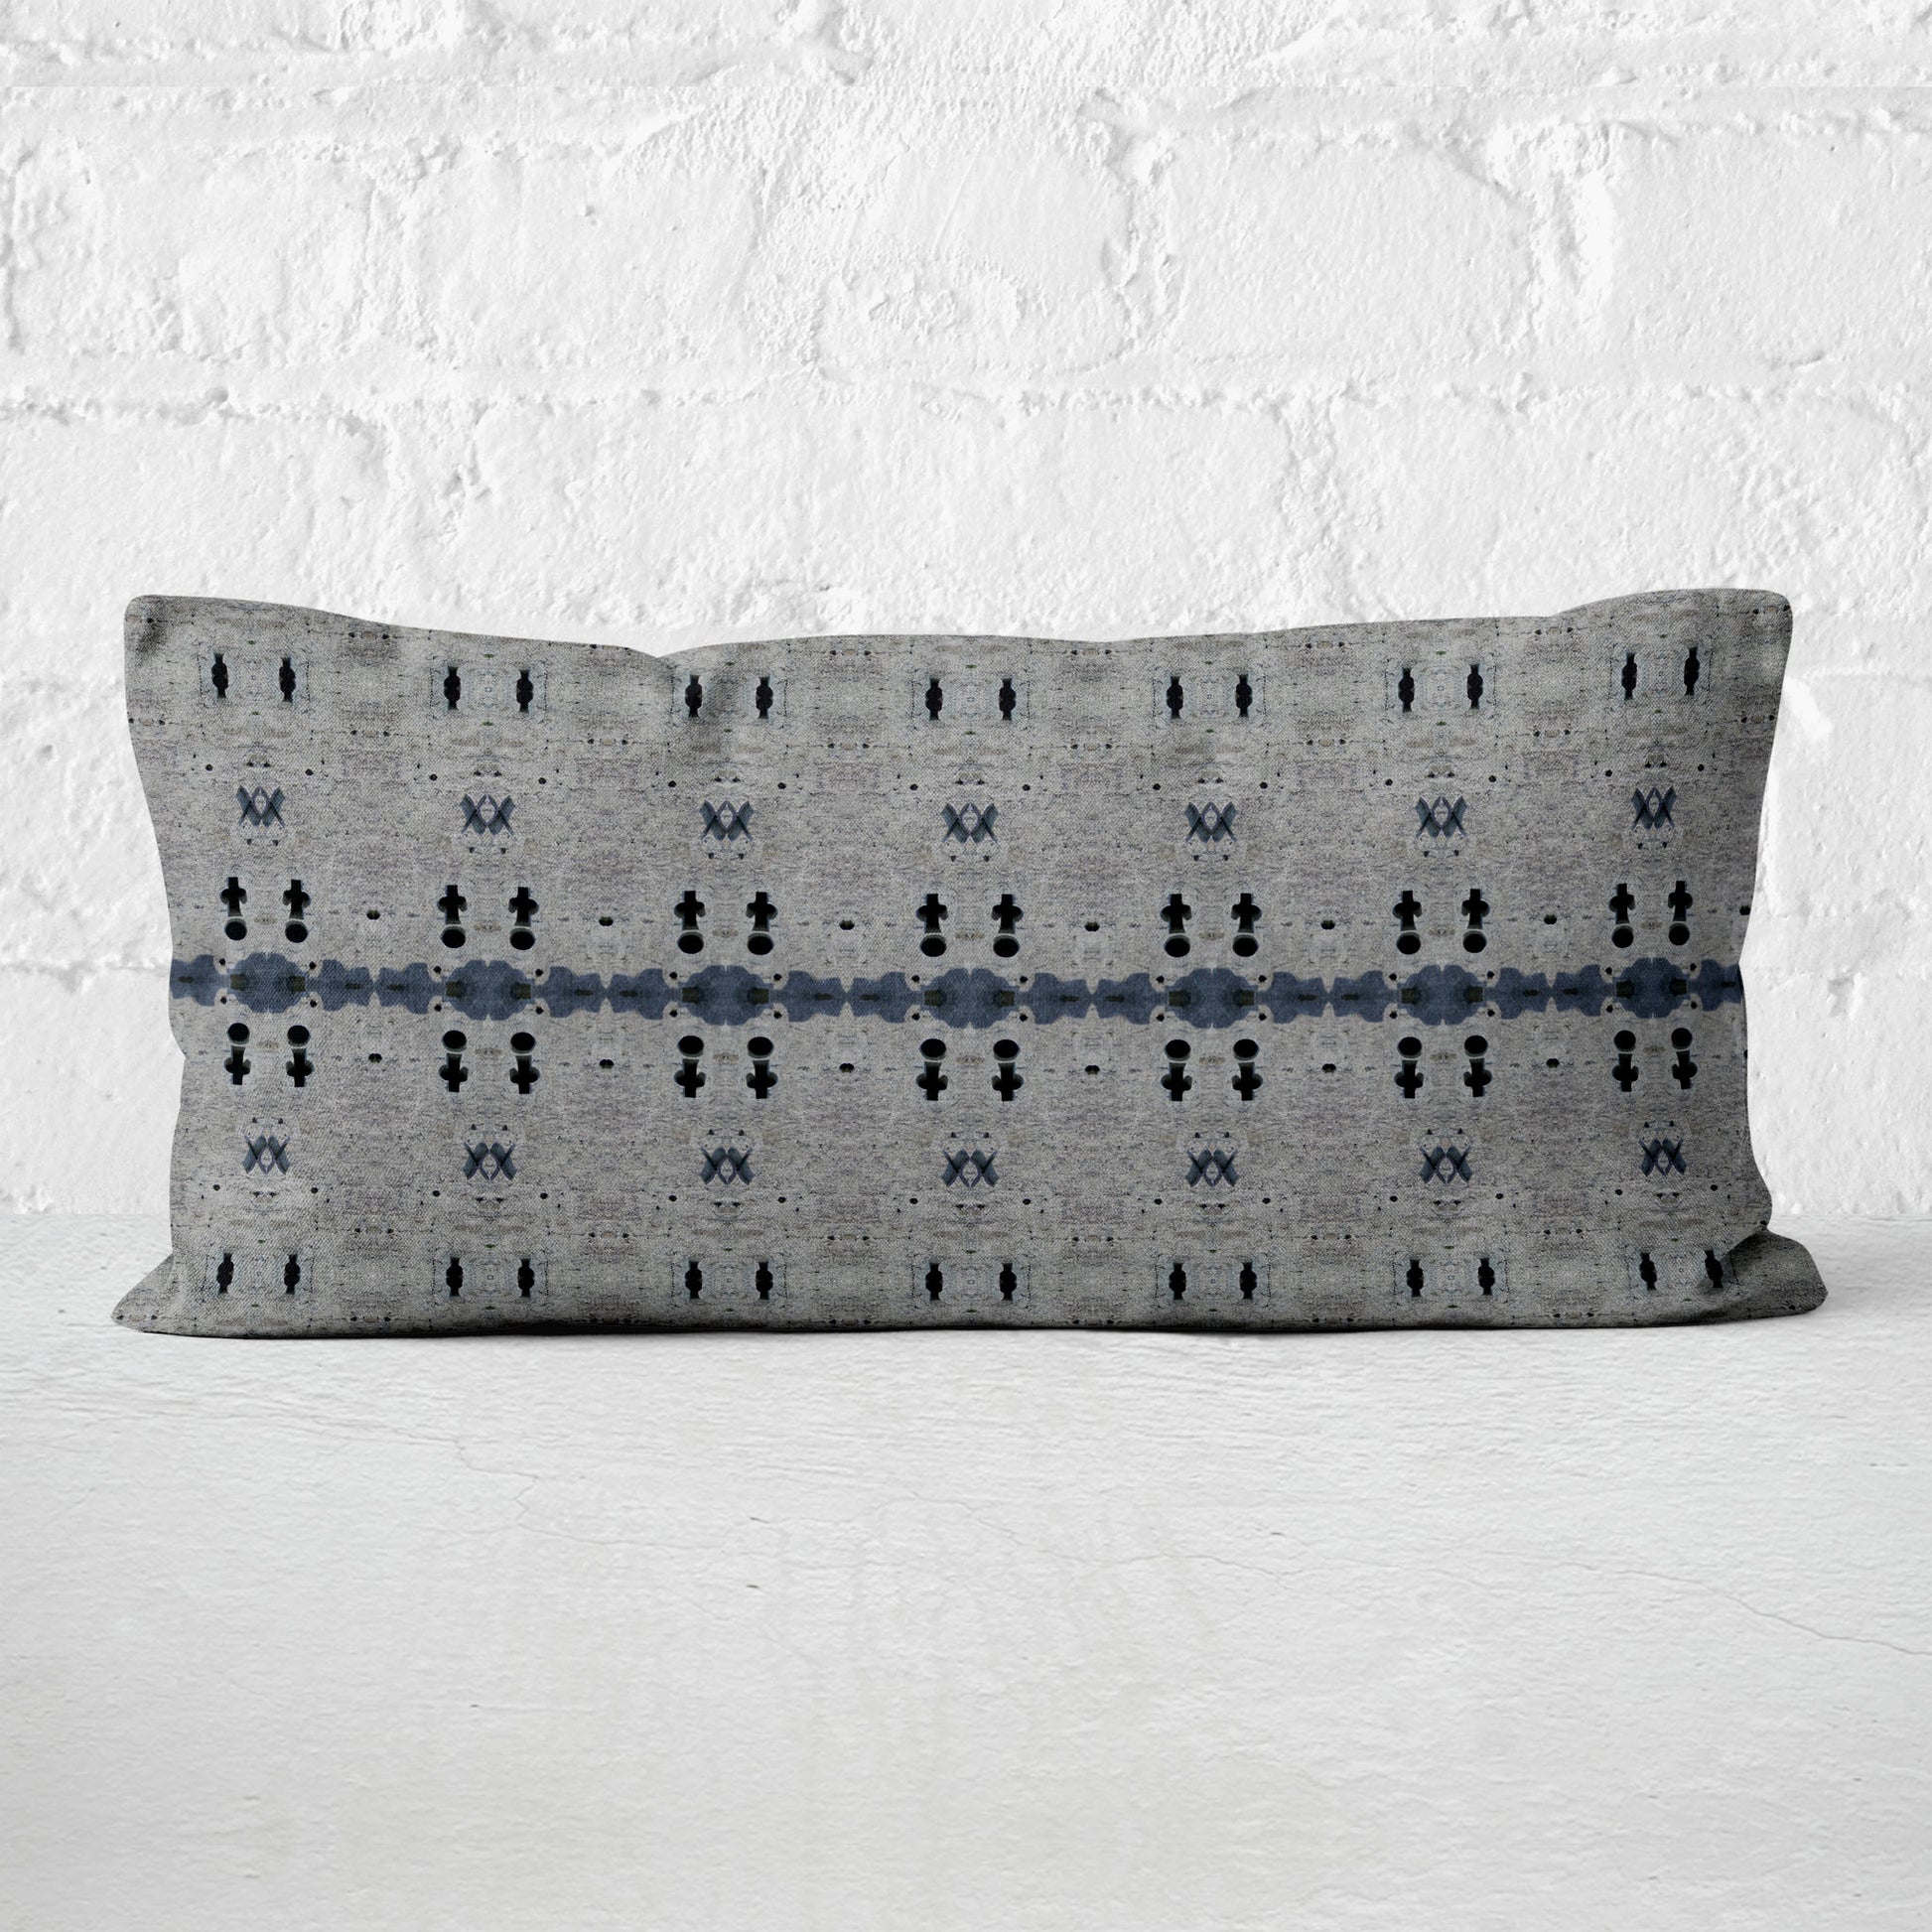 12x24 rectangular lumbar pillow featuring an abstract gray and dark blue pattern, set against a white wall